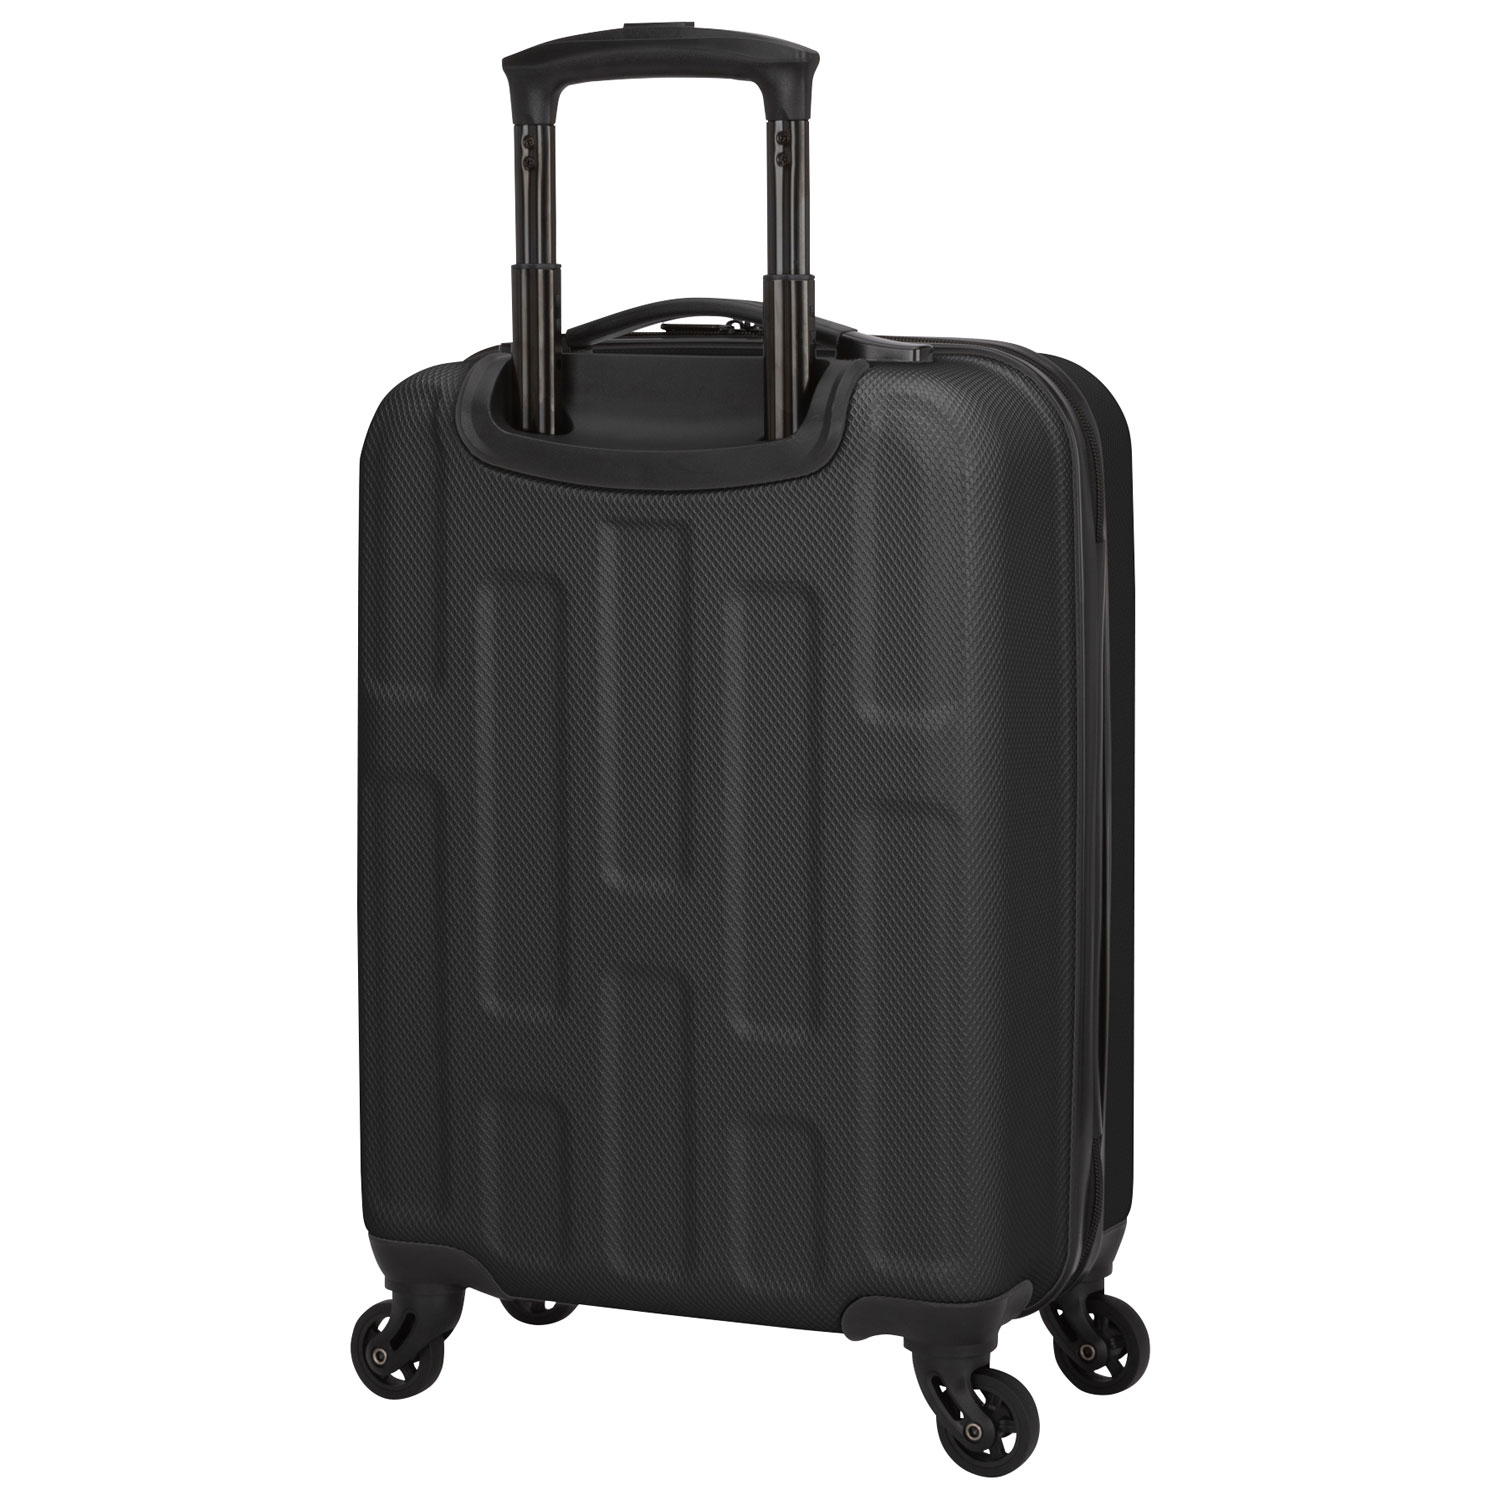 SWISSGEAR Spring Break 3-Piece Hard Side Expandable Luggage Set - Black